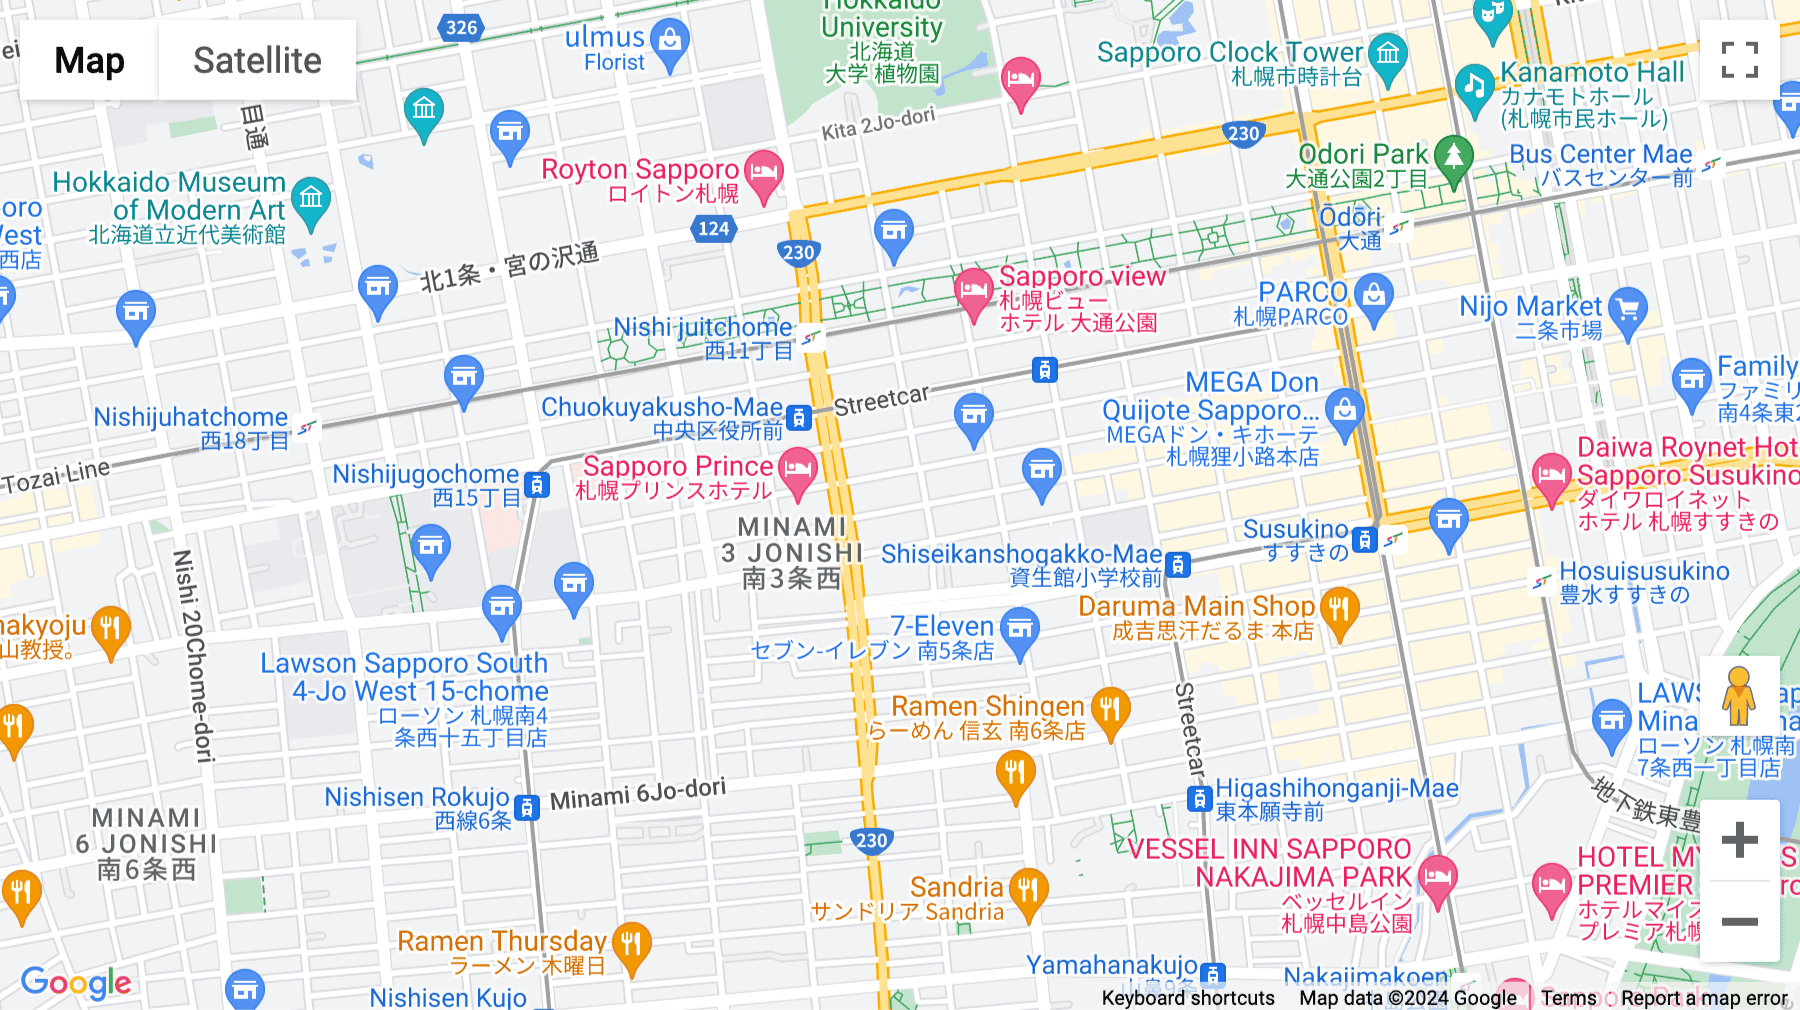 Click for interative map of 1000-24 Minami 2 West 10-chome, Taketo Building, Sapporo